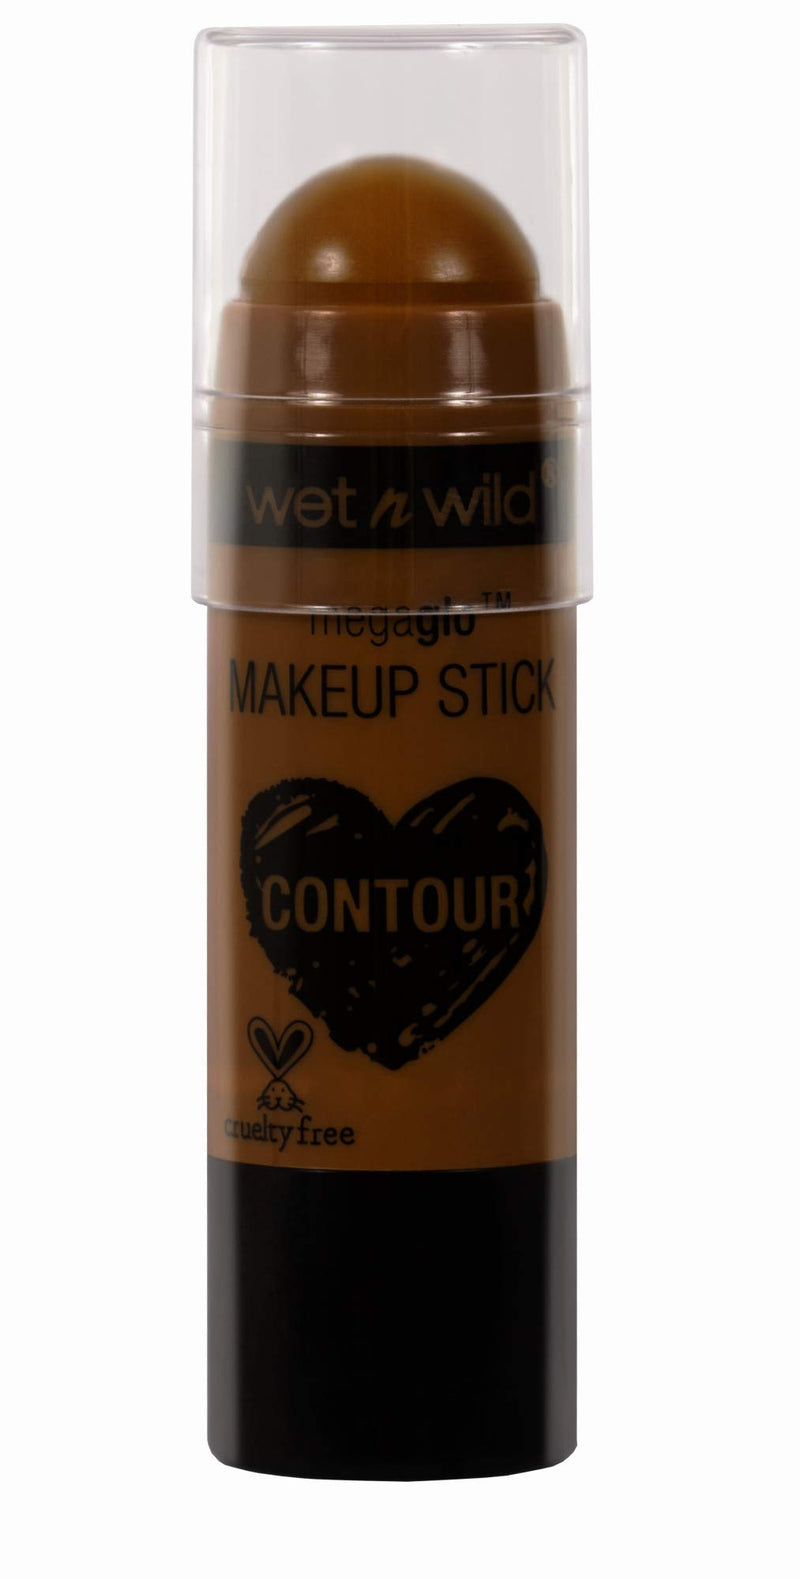 Wet & Wild Megaglo Makeup Stick 806 Where's Walnut, 1.1 Ounce - BeesActive Australia